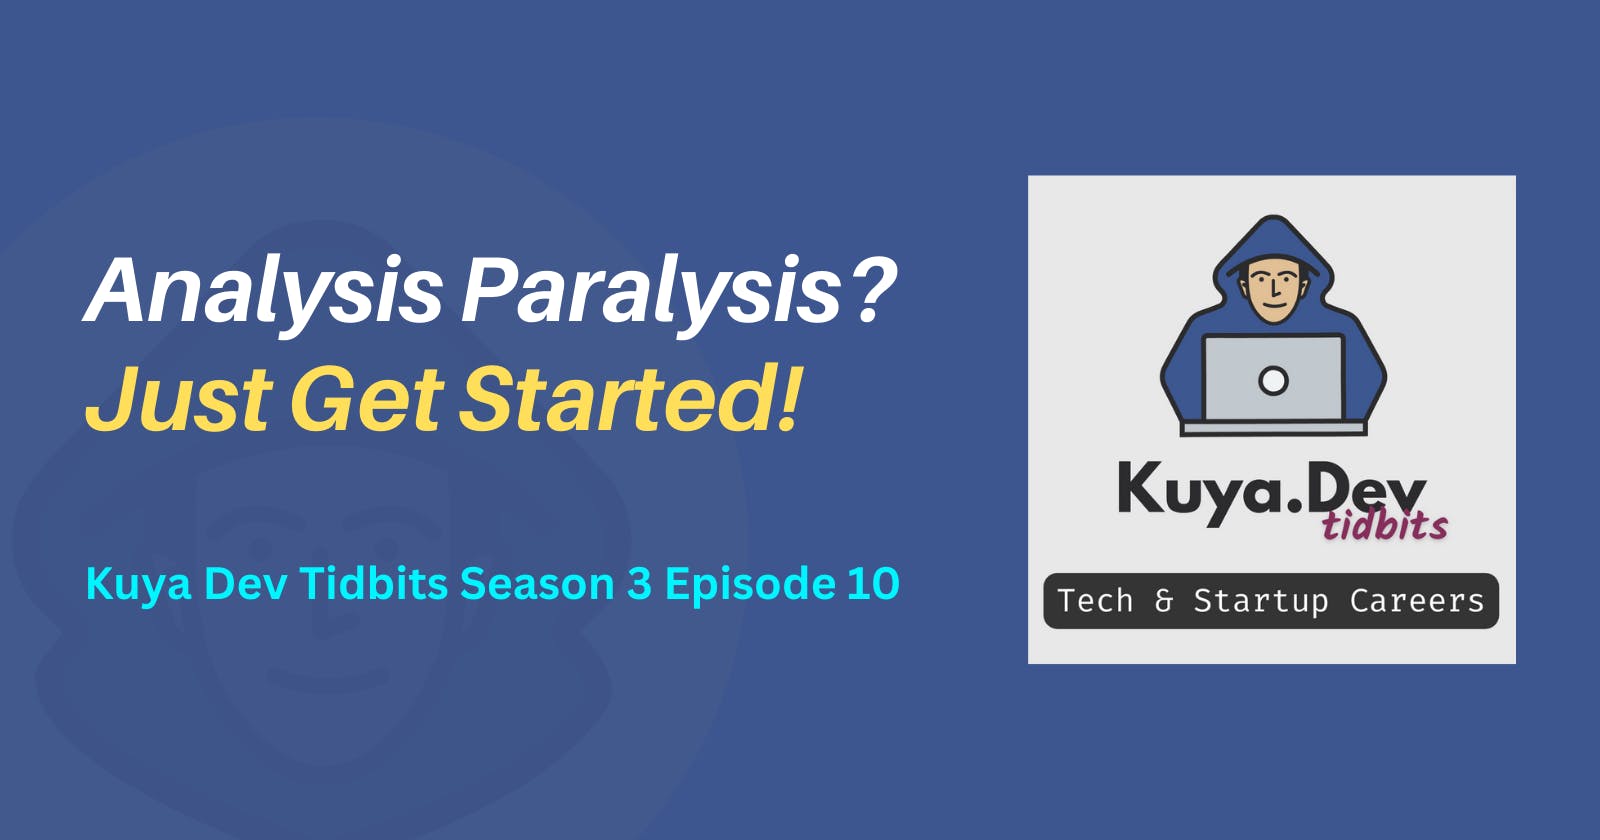 Analysis Paralysis? Just Get Started!